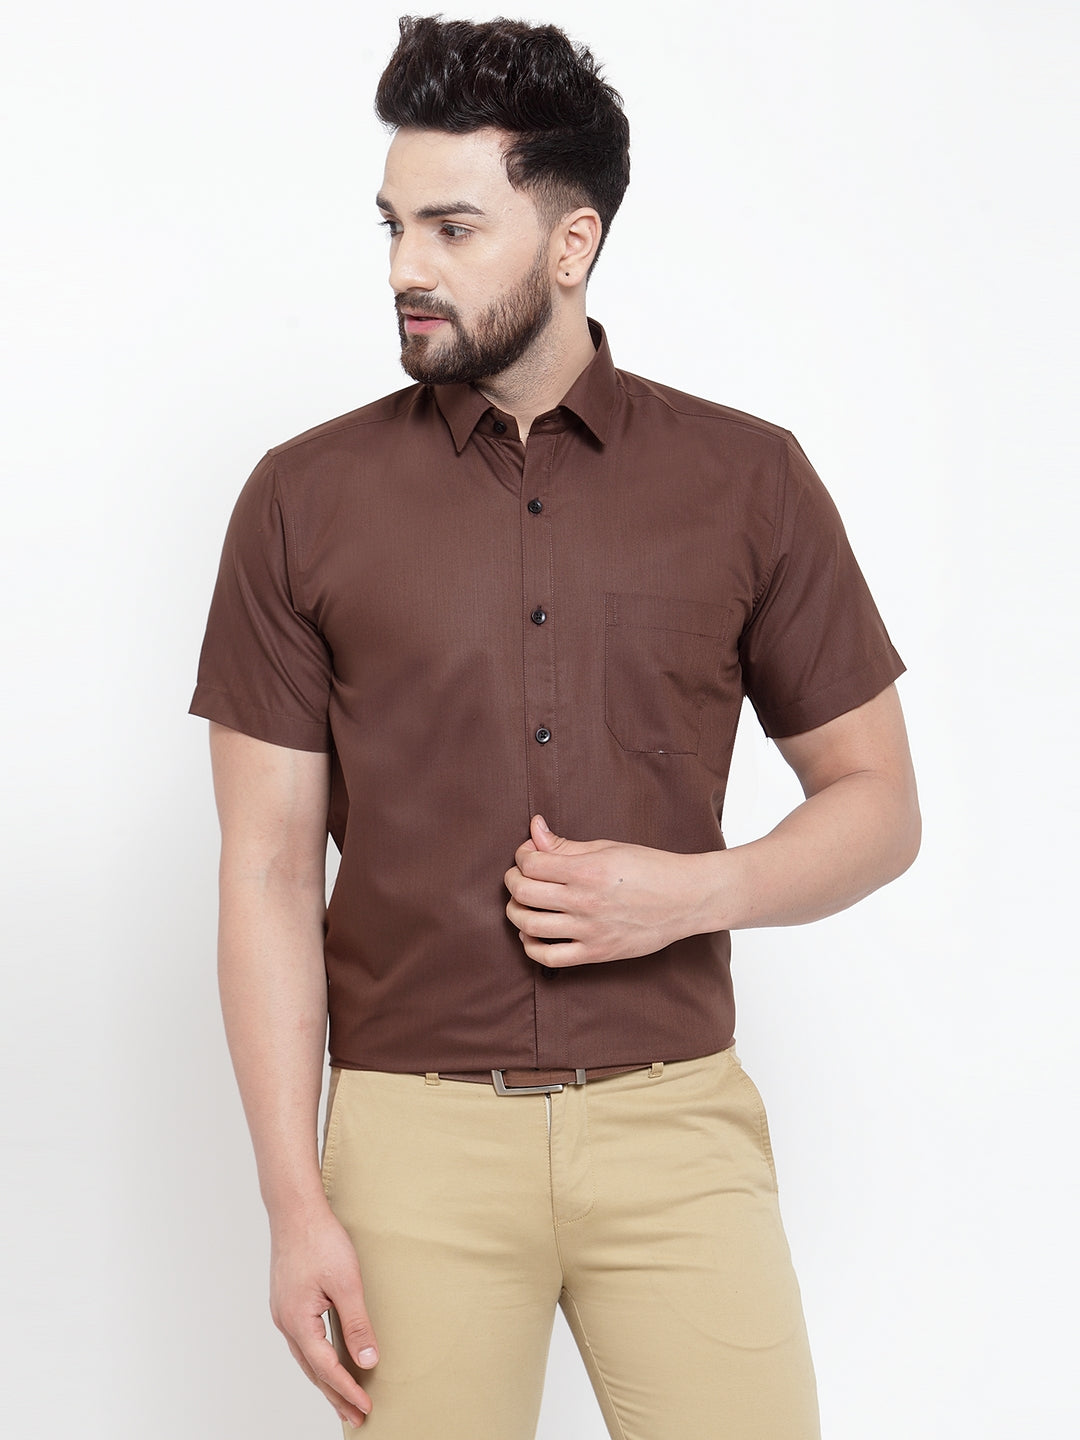 Jainish Brown Men's Cotton Half Sleeves Solid Formal Shirts